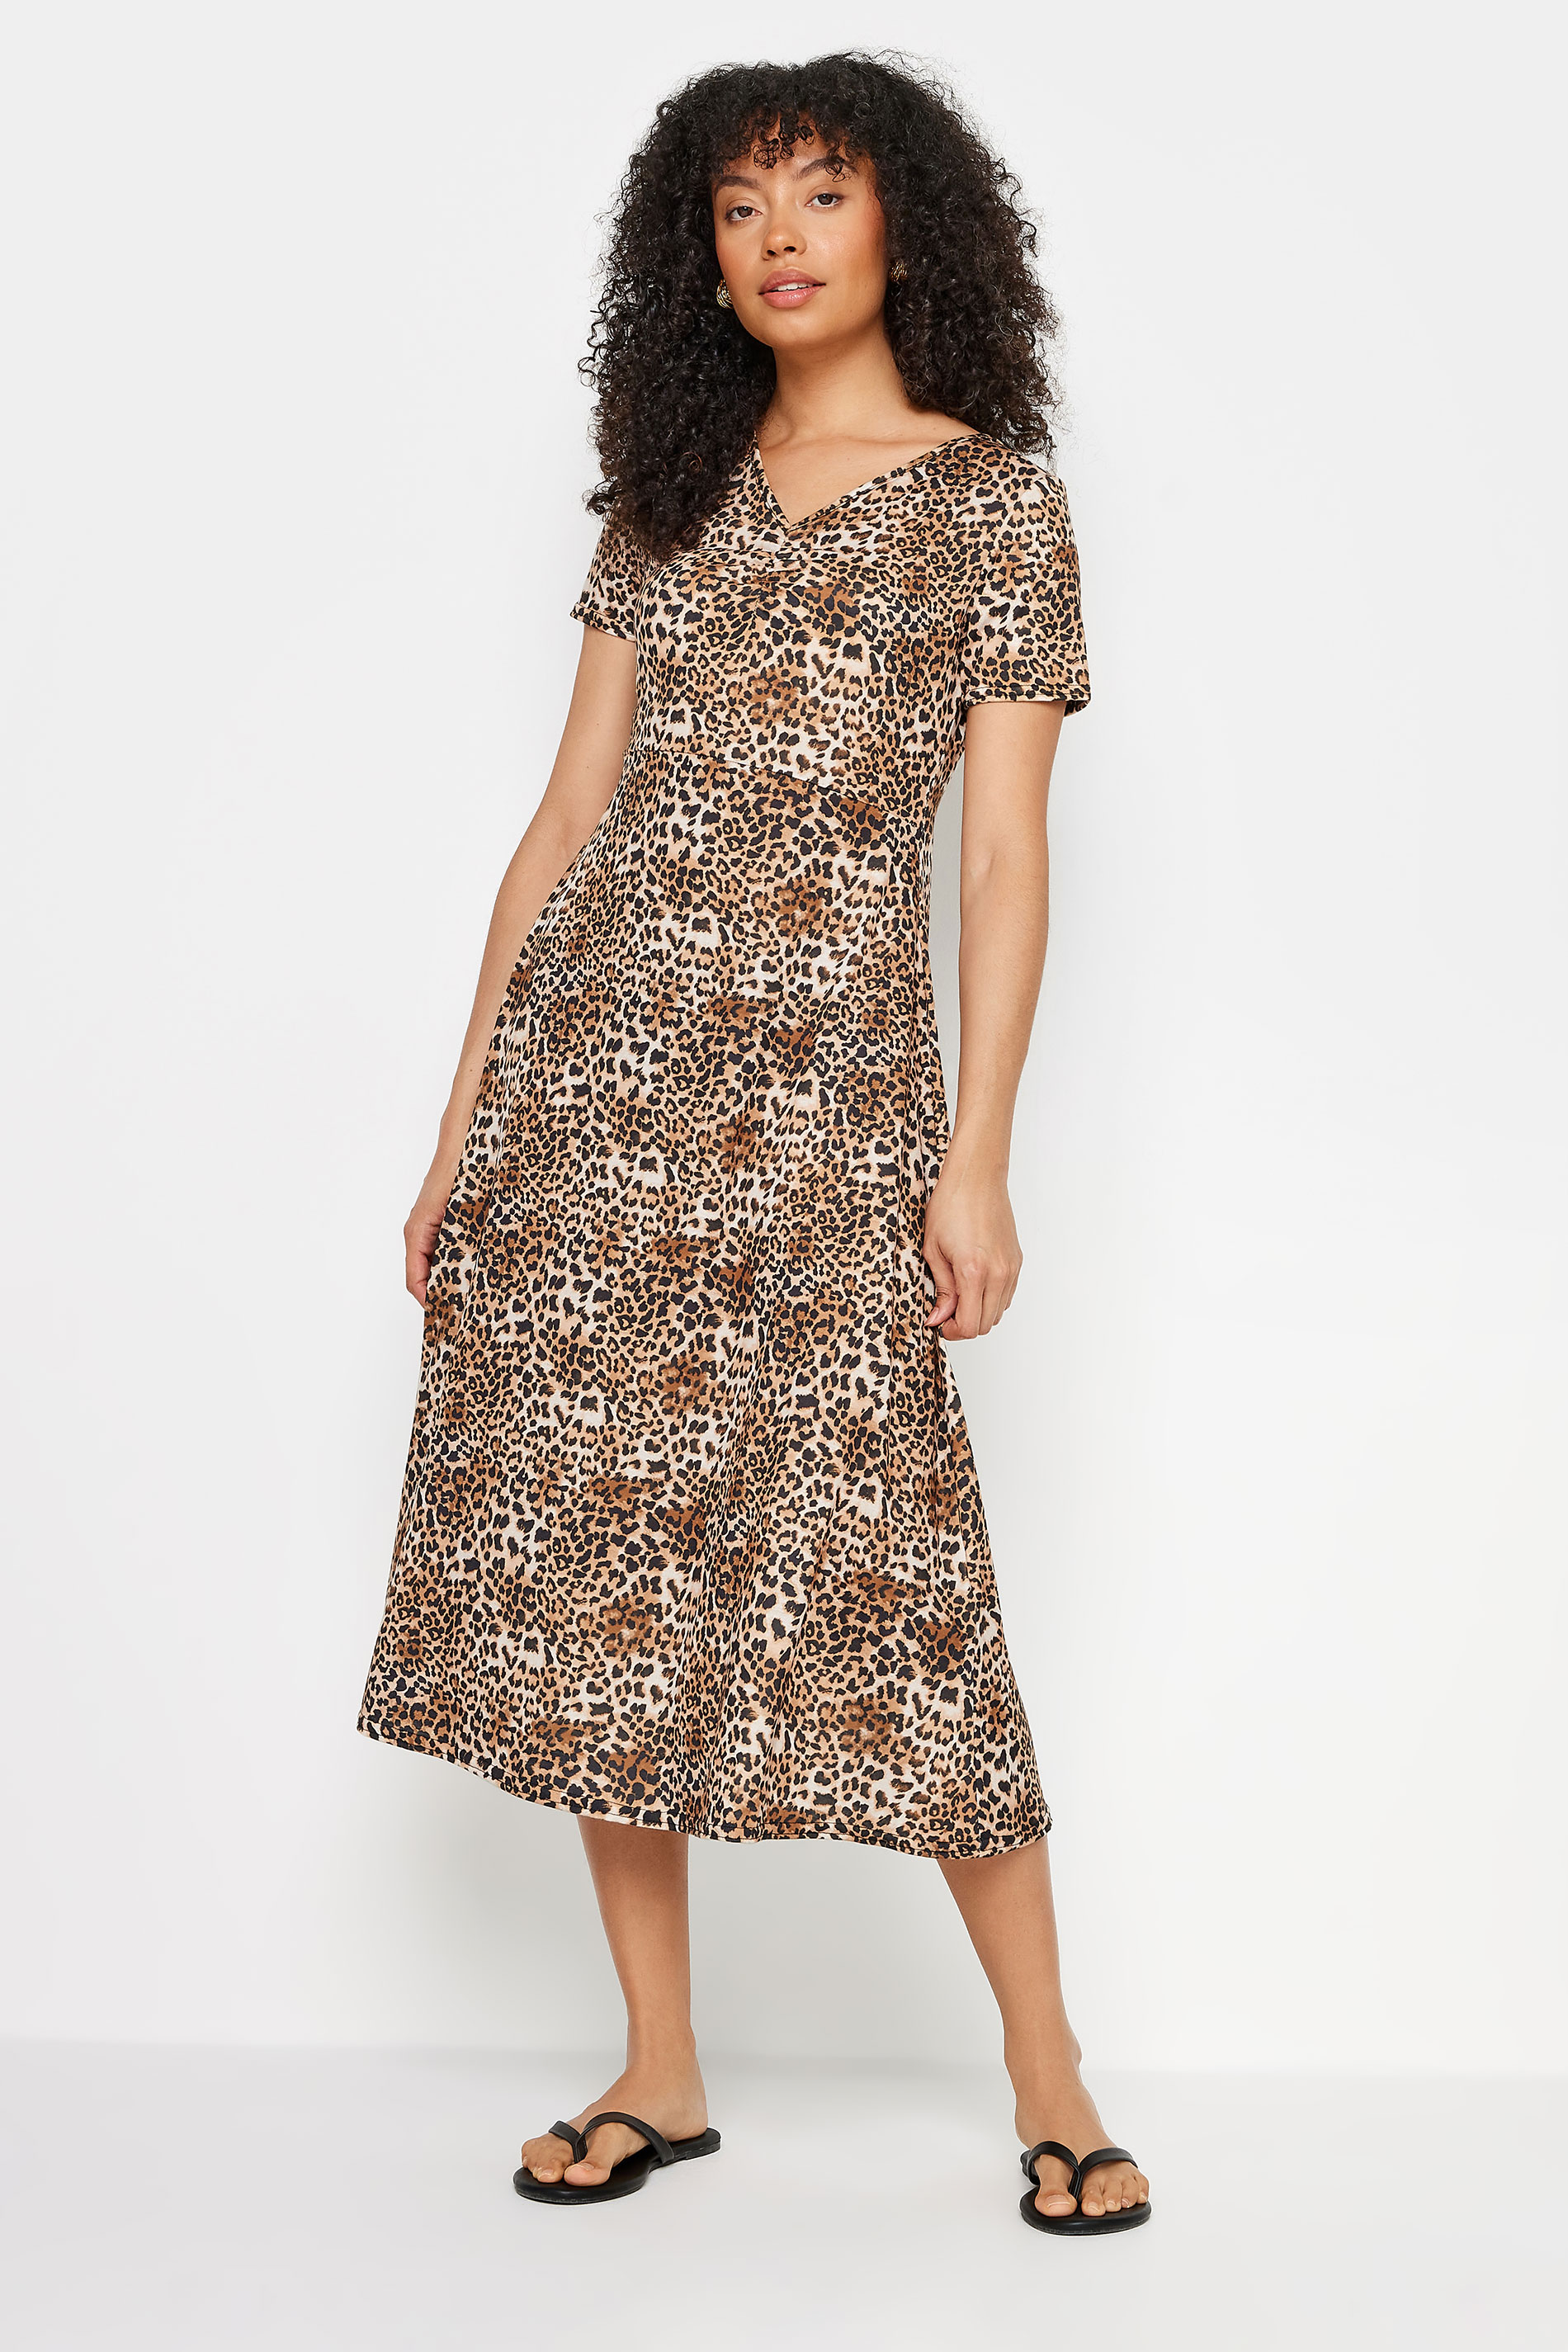 M&Co Brown Leopard Print V-Neck Dress | M&Co 2